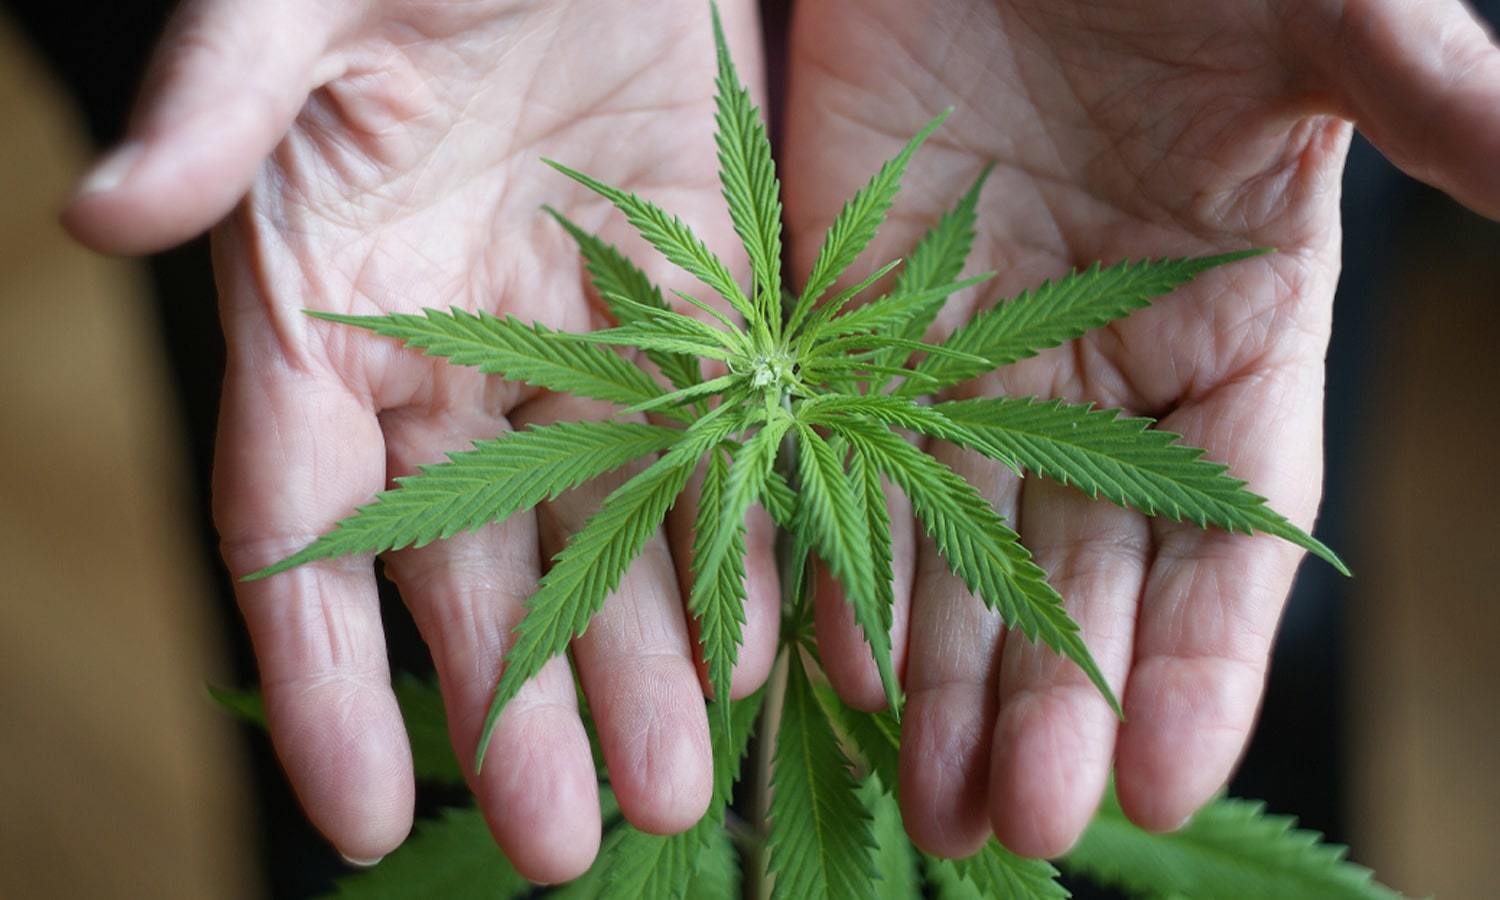 Senate Majority Leader Chuck Schumer Proposes Legalization of Marijuana in New Bill